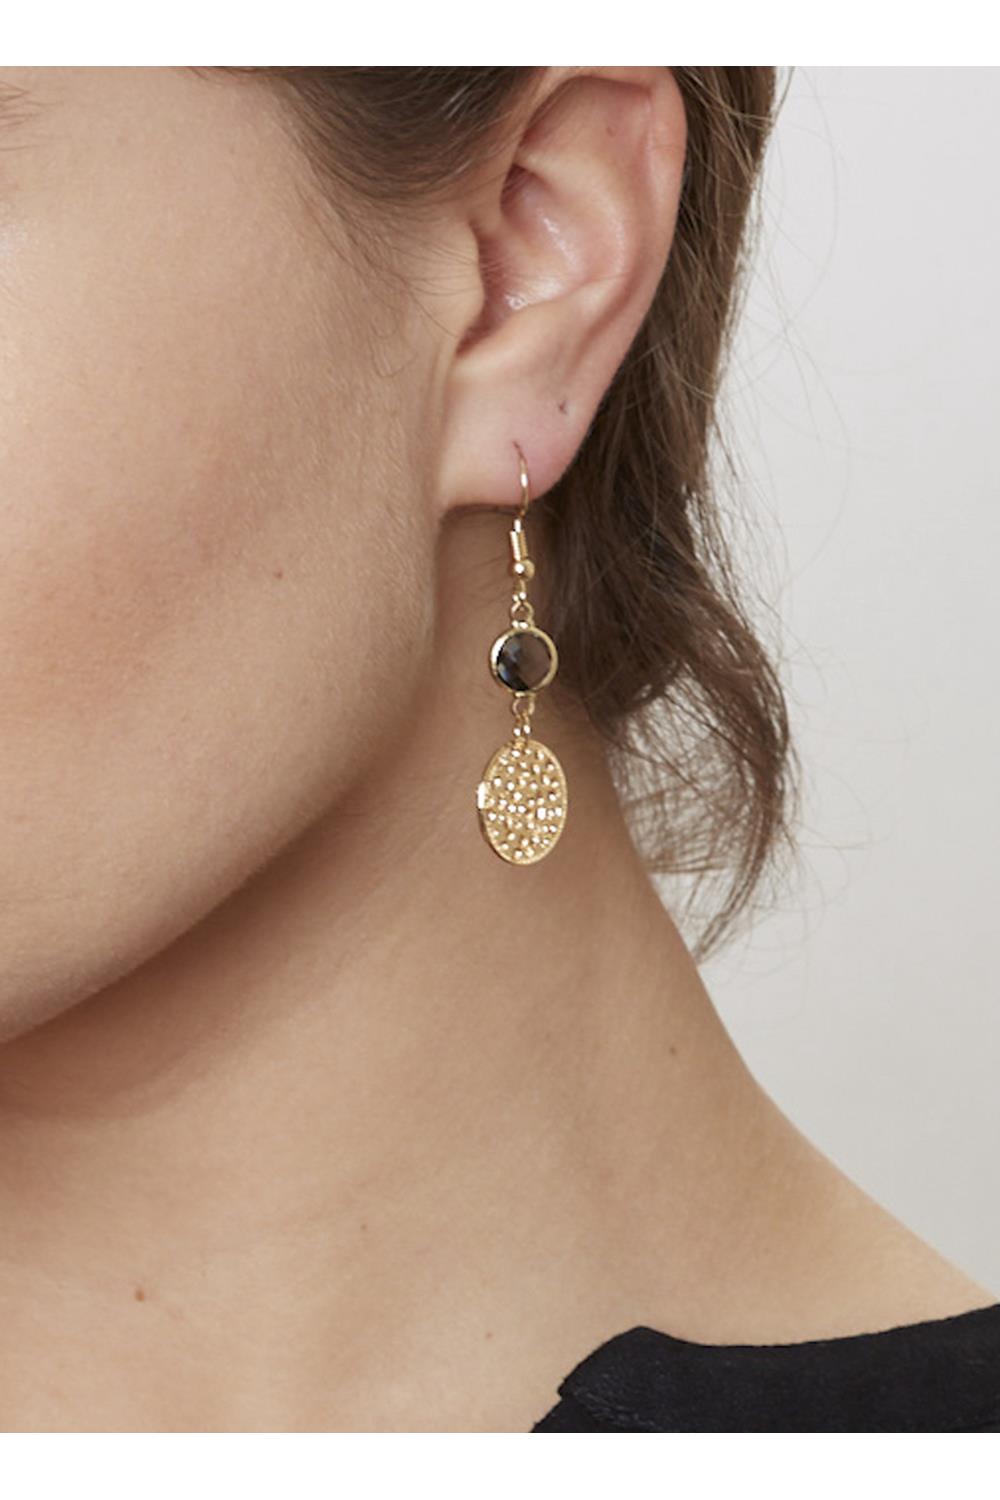 Drop Earrings Charm Jewelry ECJTX13 Black Bow Geometric Square Grey Crystal  Gem | Touchy Style